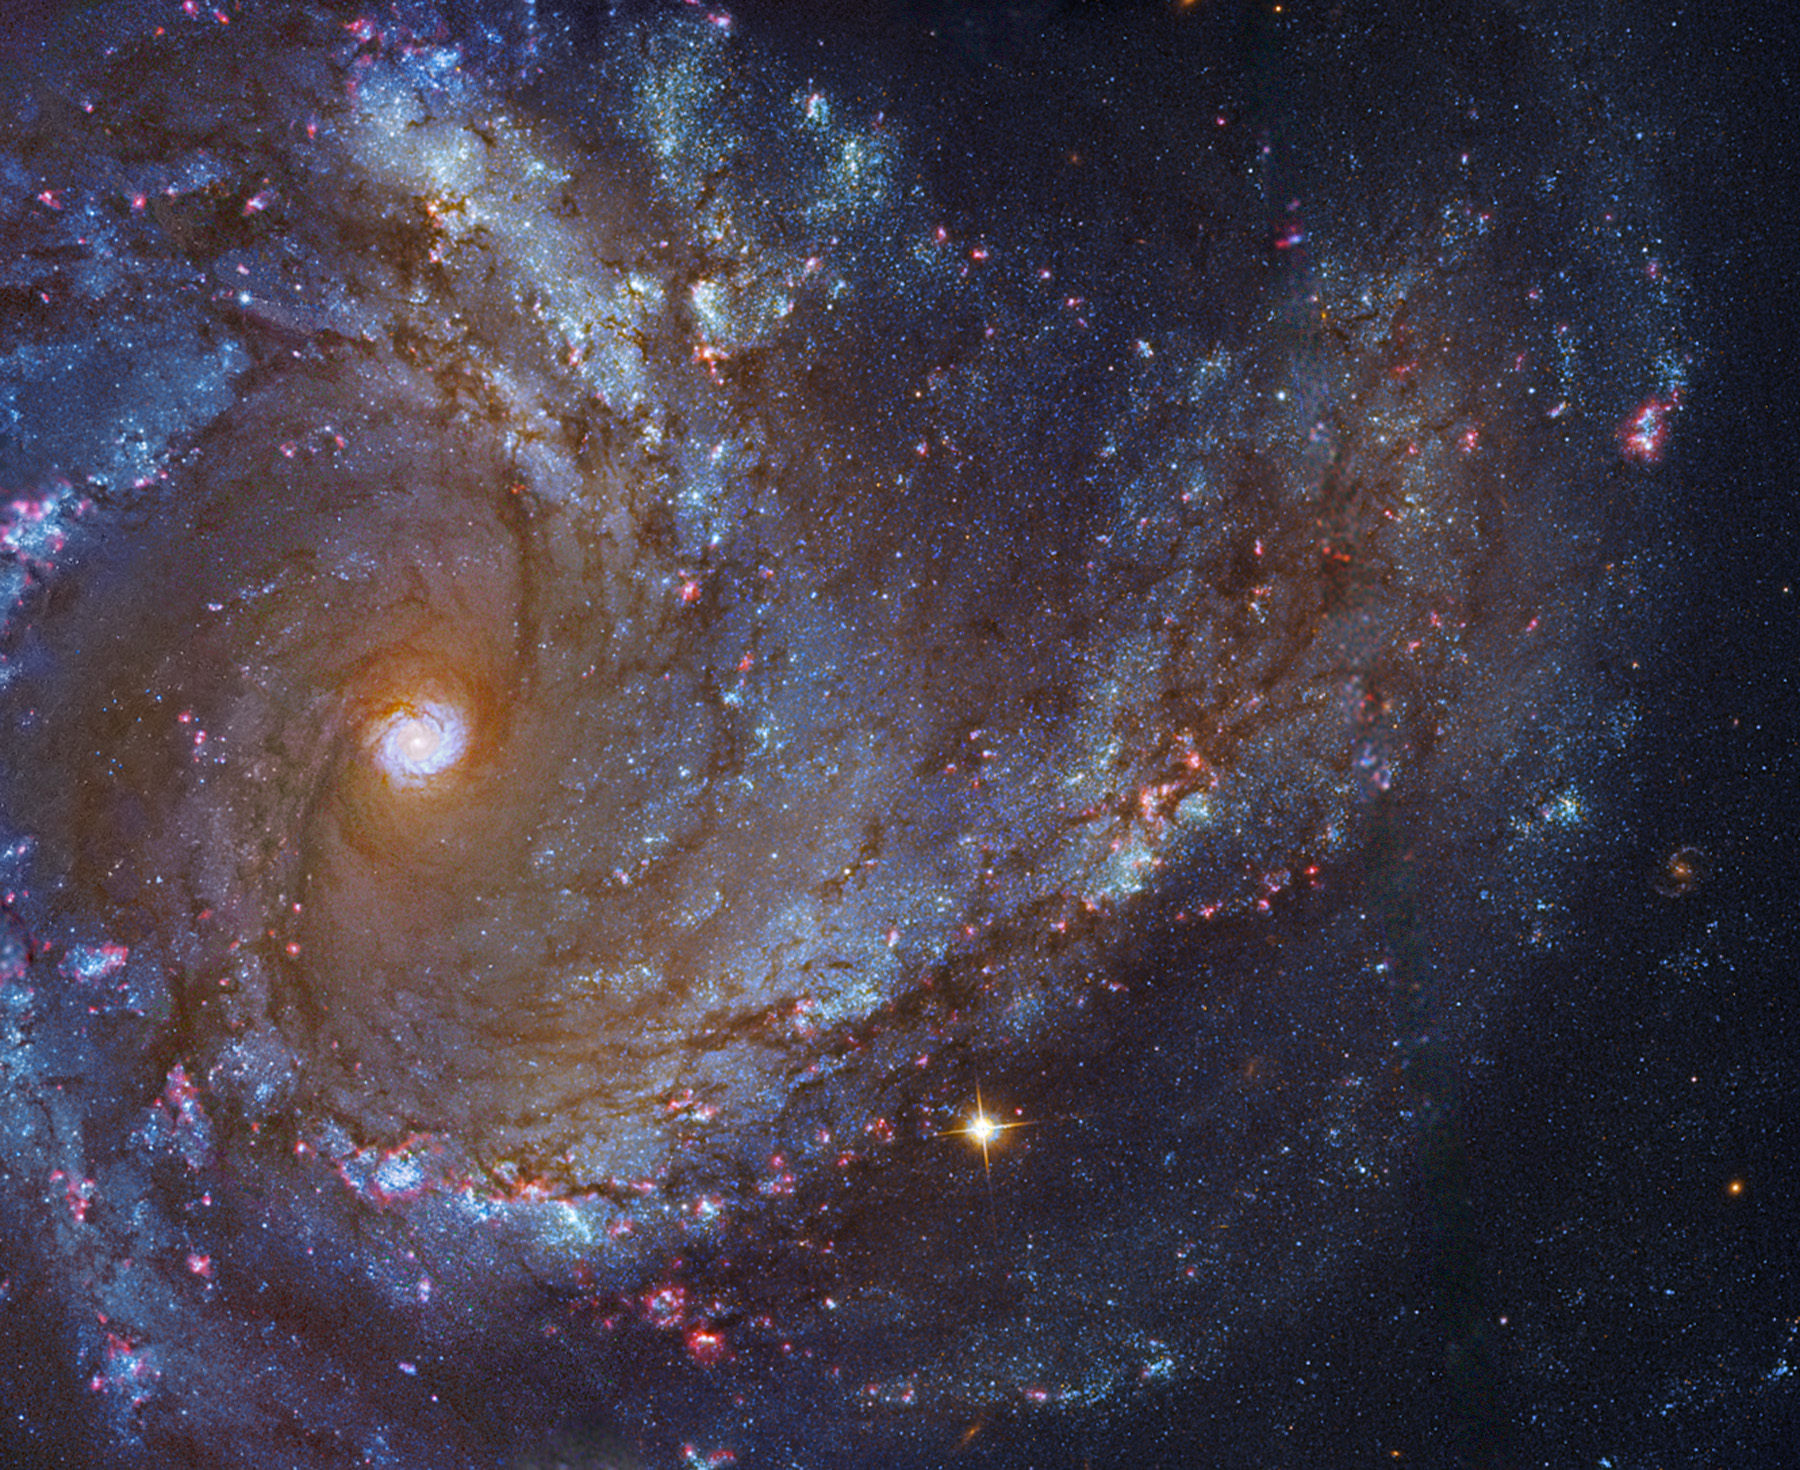  2019年8月28日<br />M61特寫 <br />影像提供: NASA, ESA, Hubble, ESO, 業餘影像; 影像處理與版權: Robert Gendler & Roberto Colombari <br />說明: 這幅呈現正向螺旋星系M61的壯麗影像，整合了來自哈伯太空望遠鏡、歐南天文台、與數部地面小望遠鏡的影像數據。 隸屬於室女座星系團的M61，又名為NGC 4303，距離我們只有5千5百萬光年遠。<br /> 